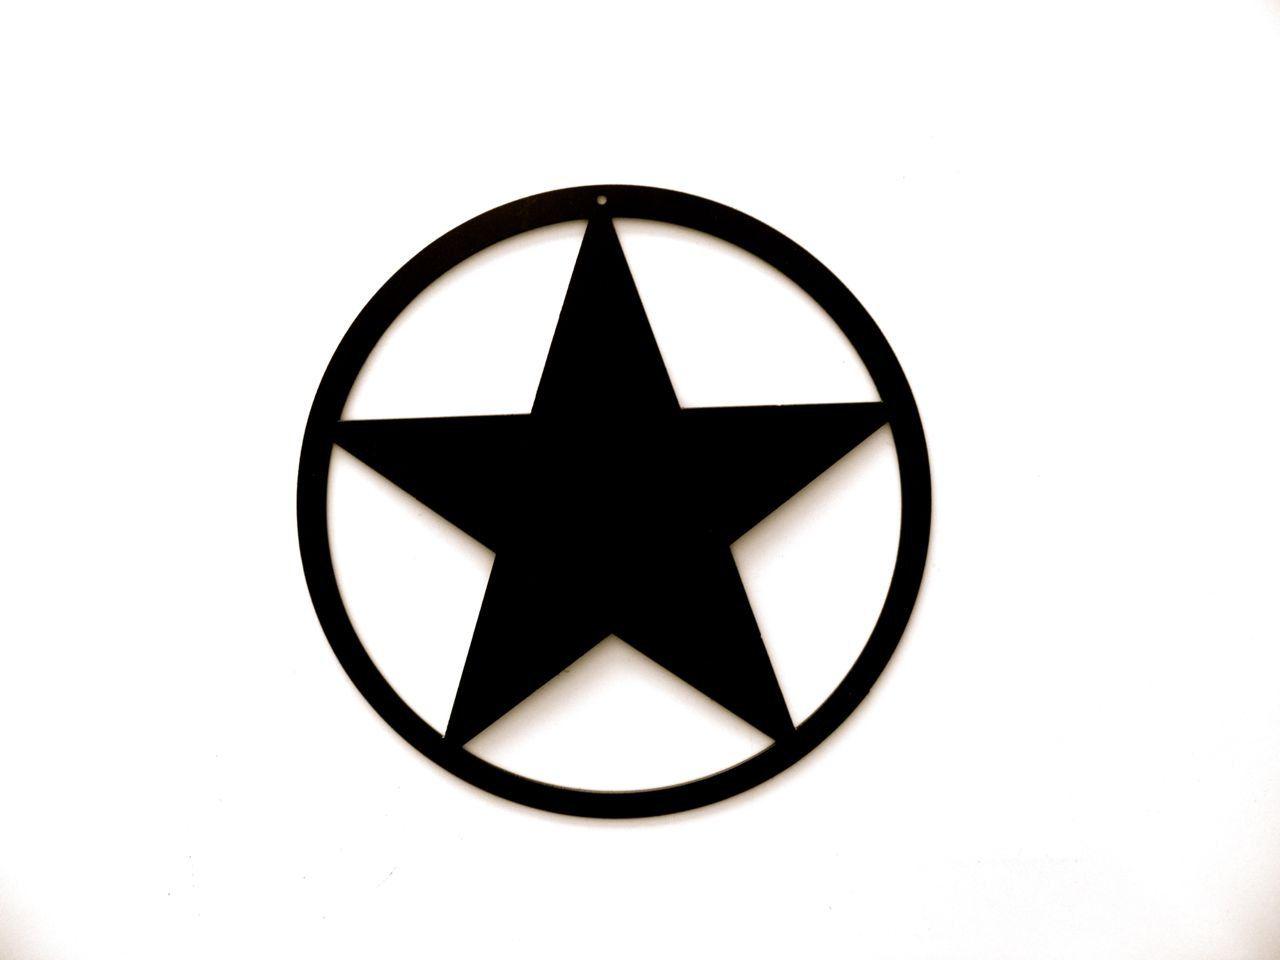 Black and White with Blue Circle Logo - Black star in circle Logos